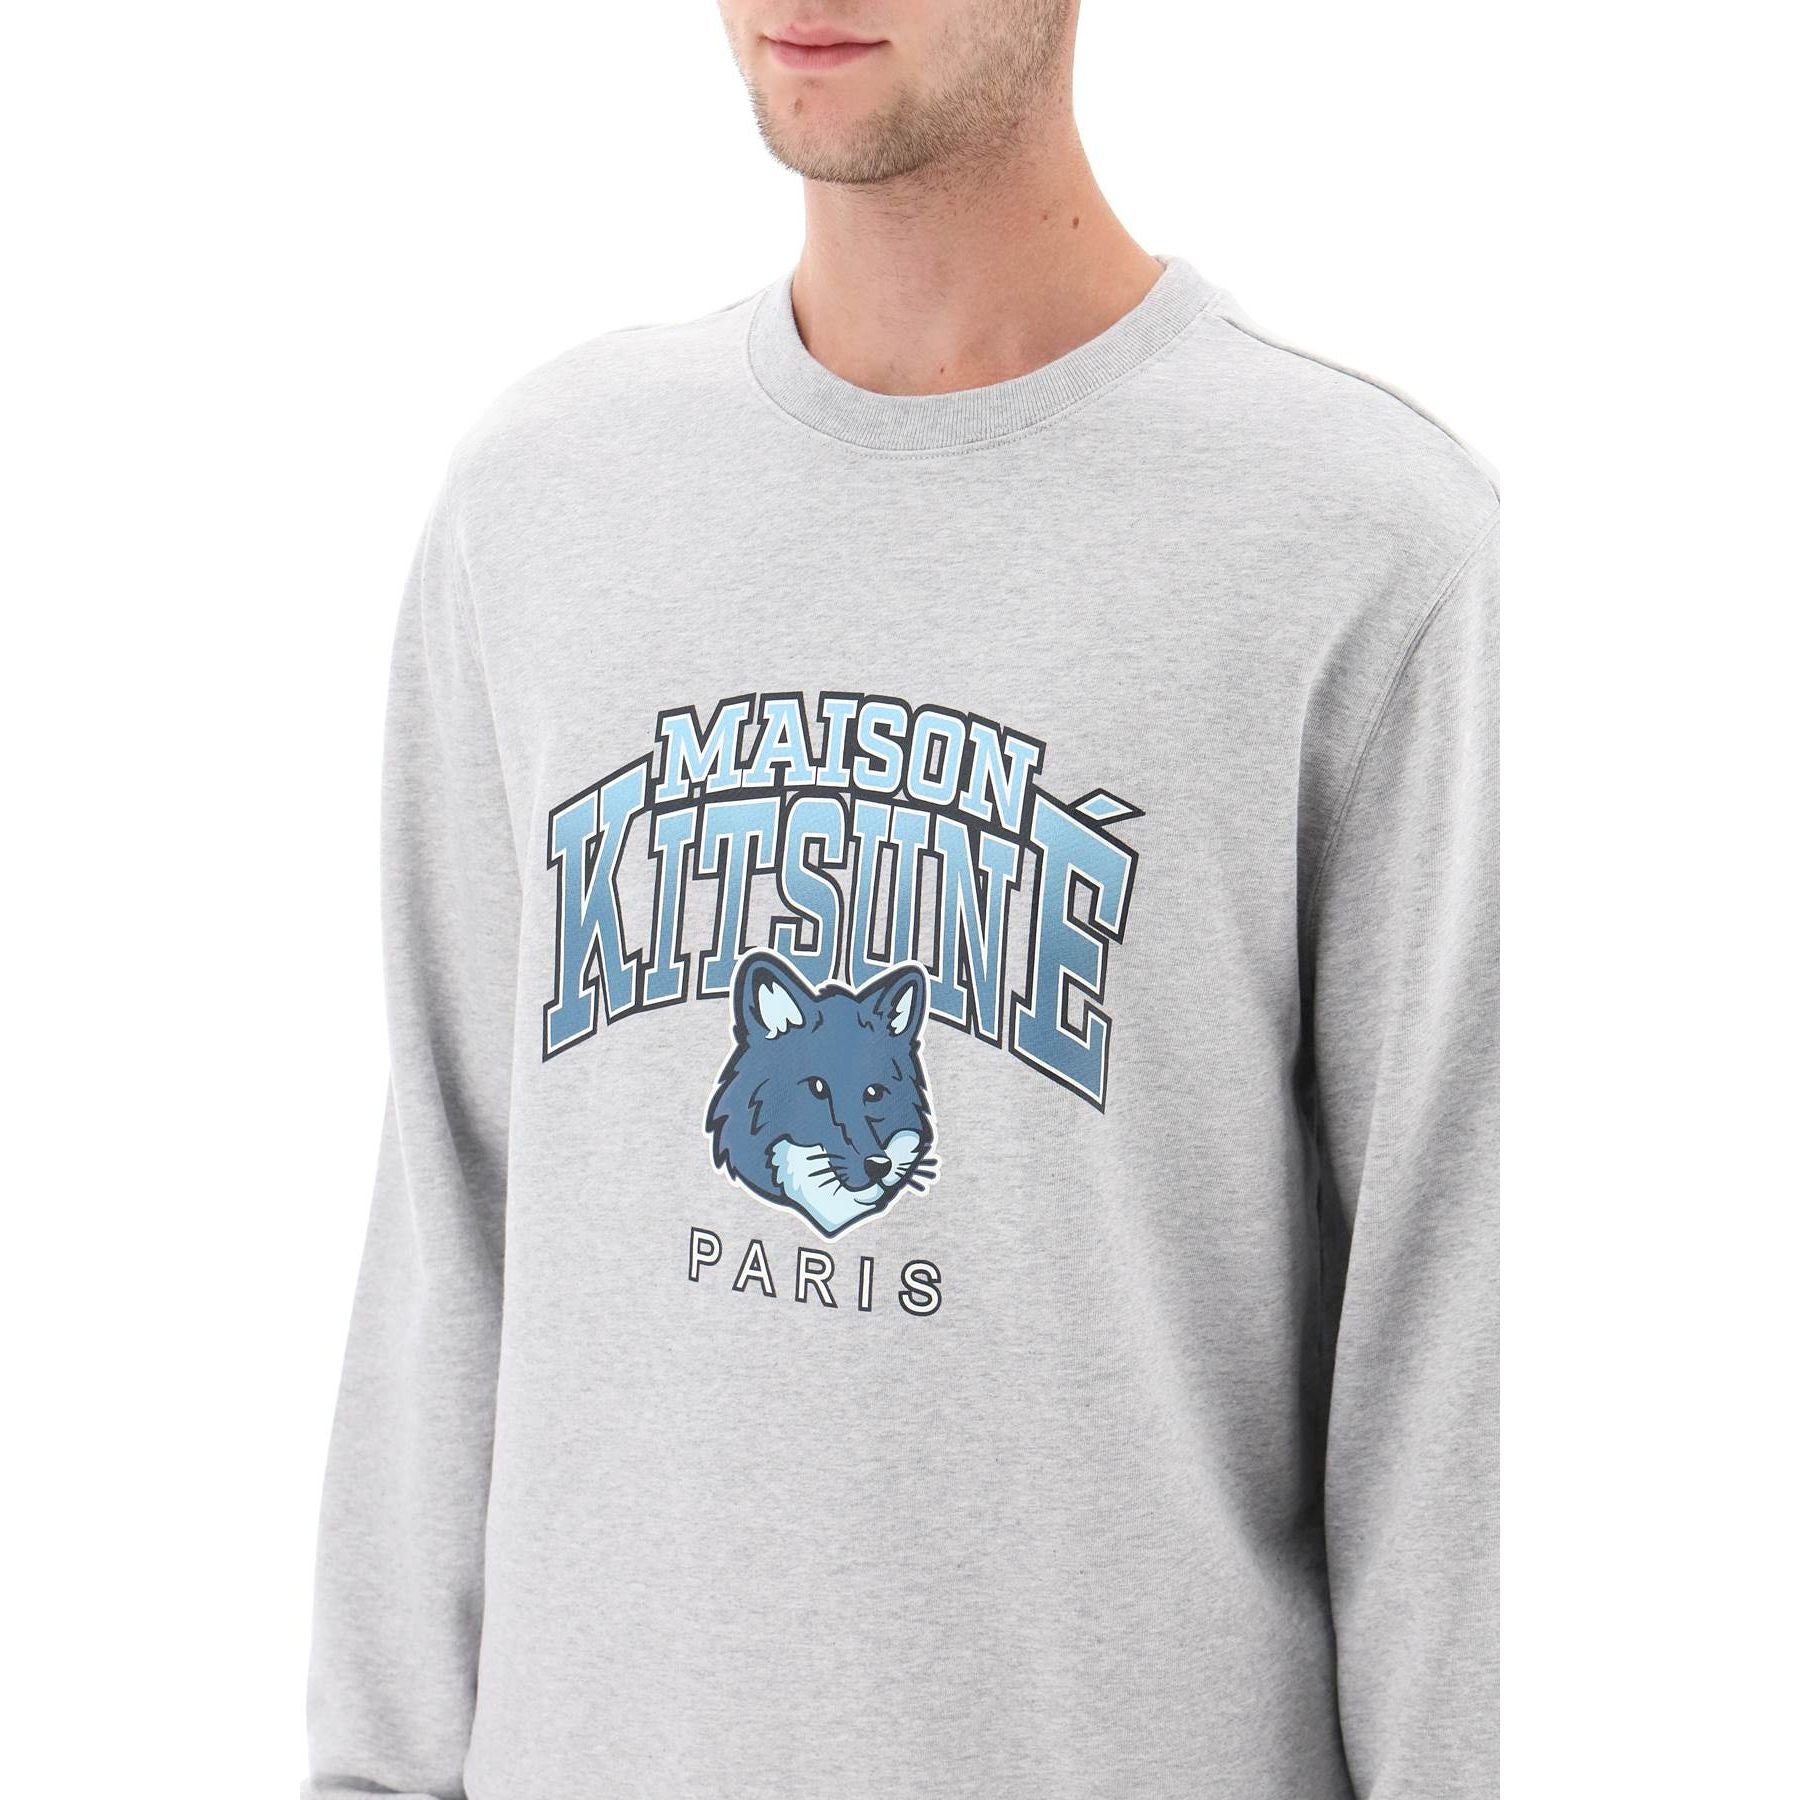 Crew Neck Sweatshirt With Campus Fox Print